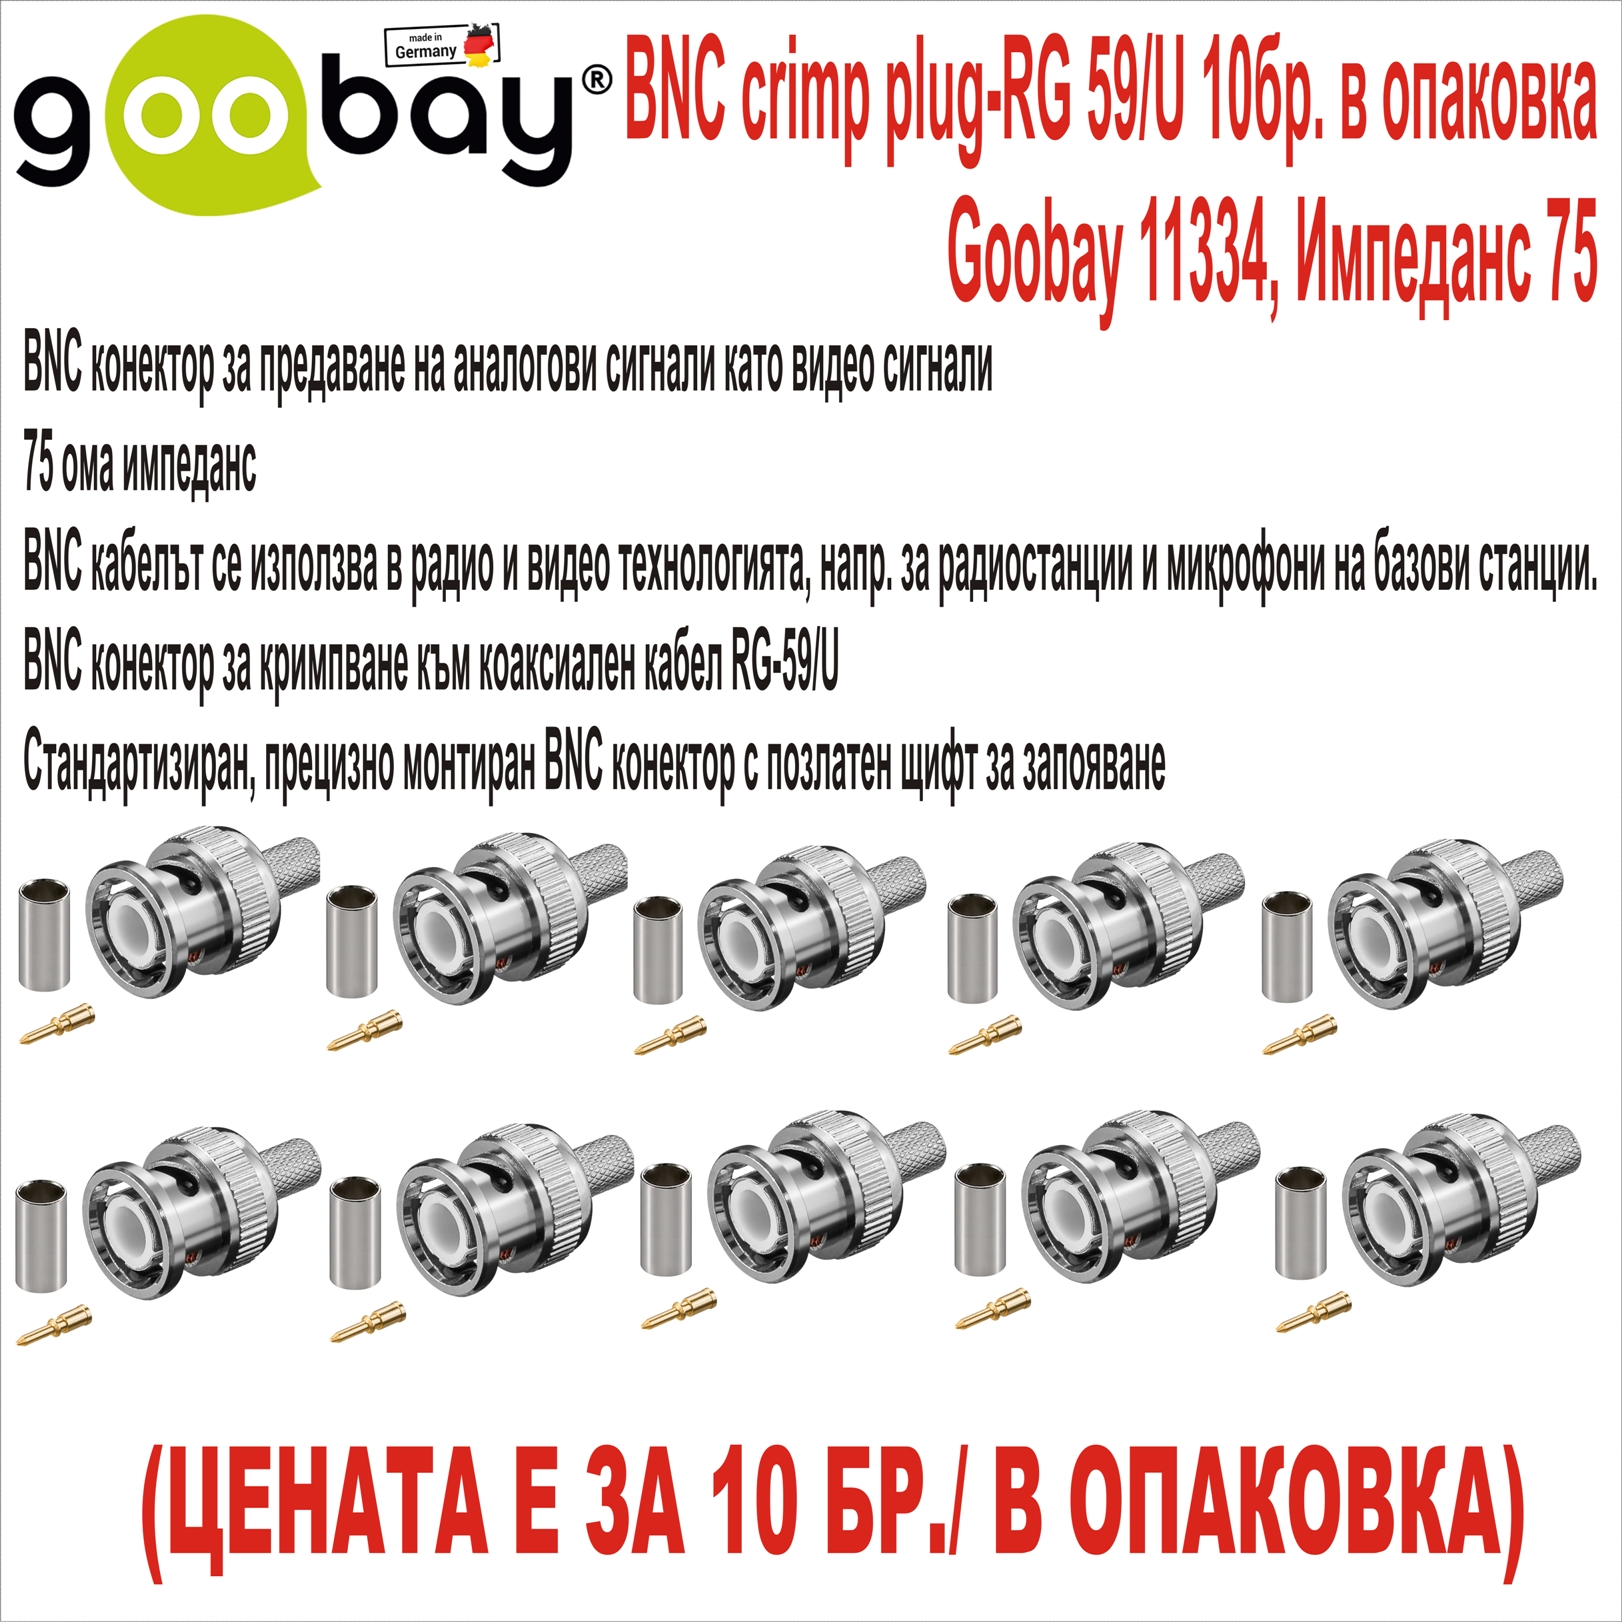 BNC crimp plug-RG 59/U Goobay 11334 Импеданс 75